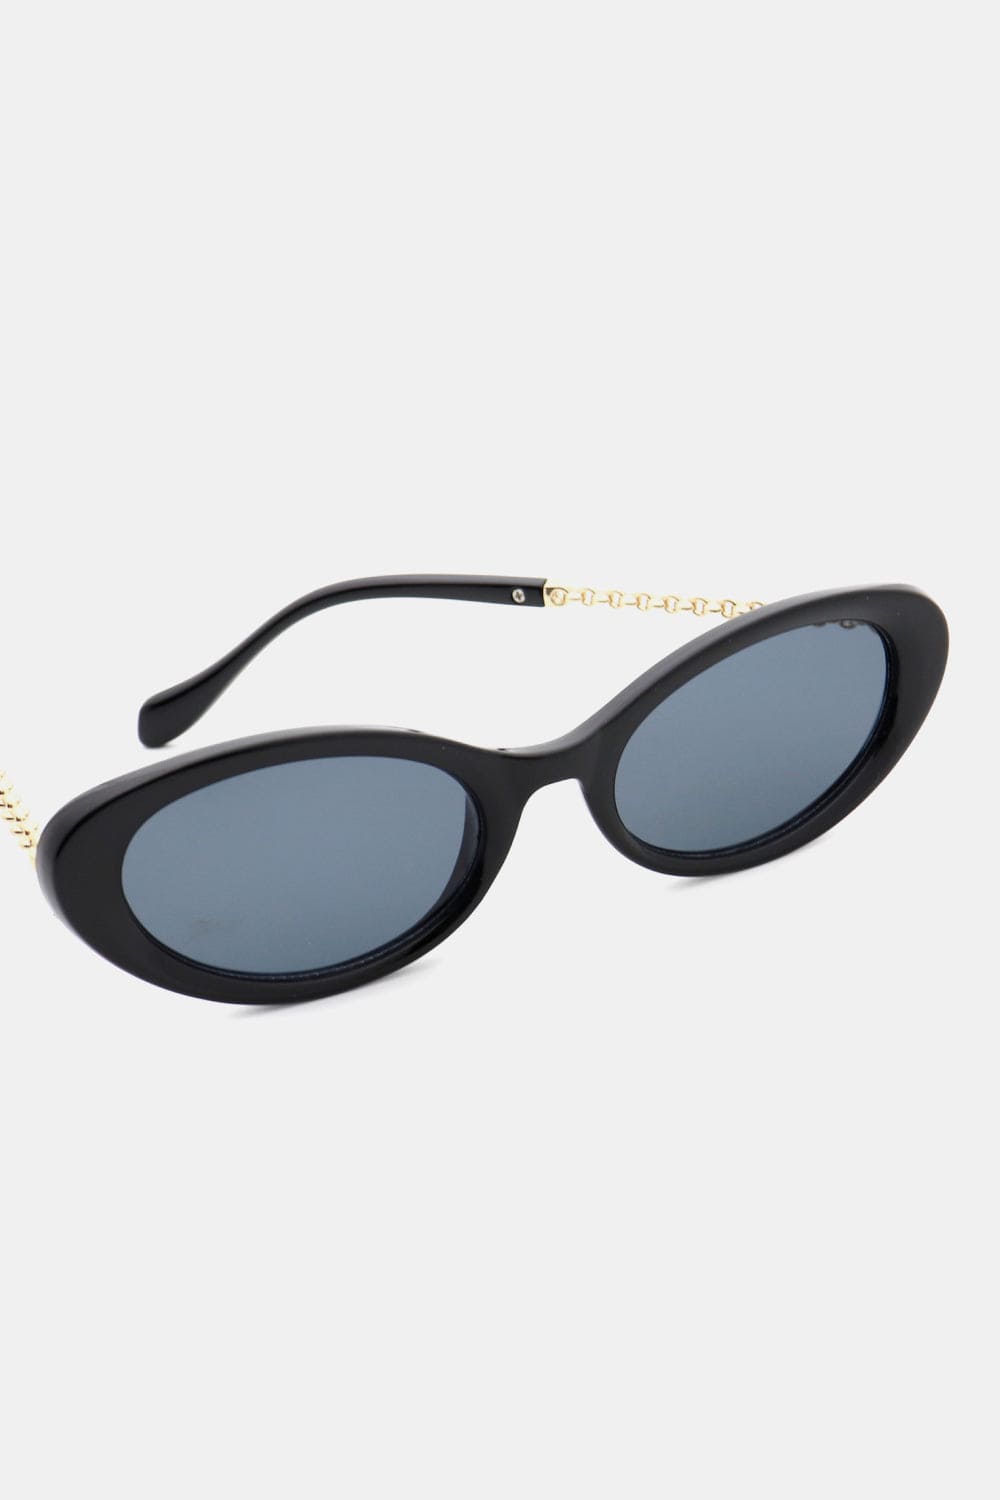 The802Gypsy sunglasses GYPSY-Polycarbonate Frame Cat-Eye Sunglasses